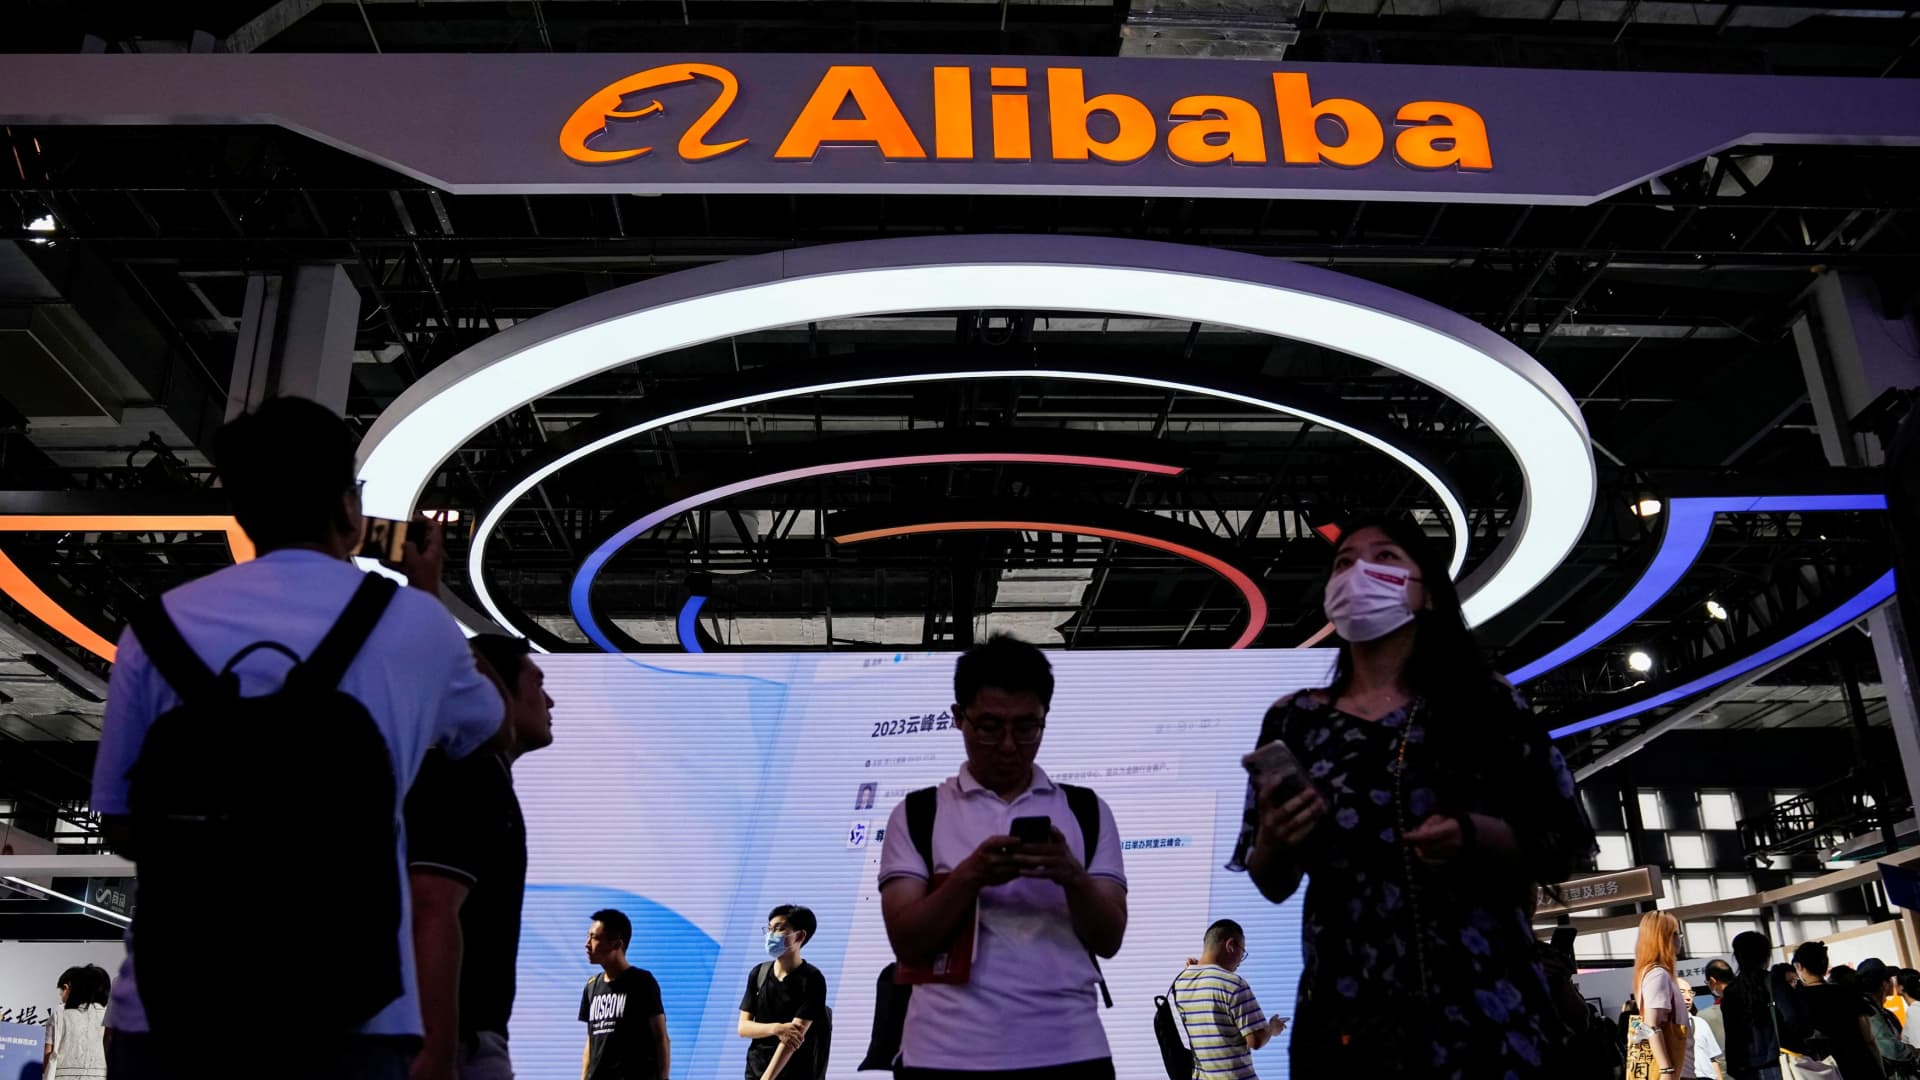 Alibaba plans to IPO its logistics unit Cainiao